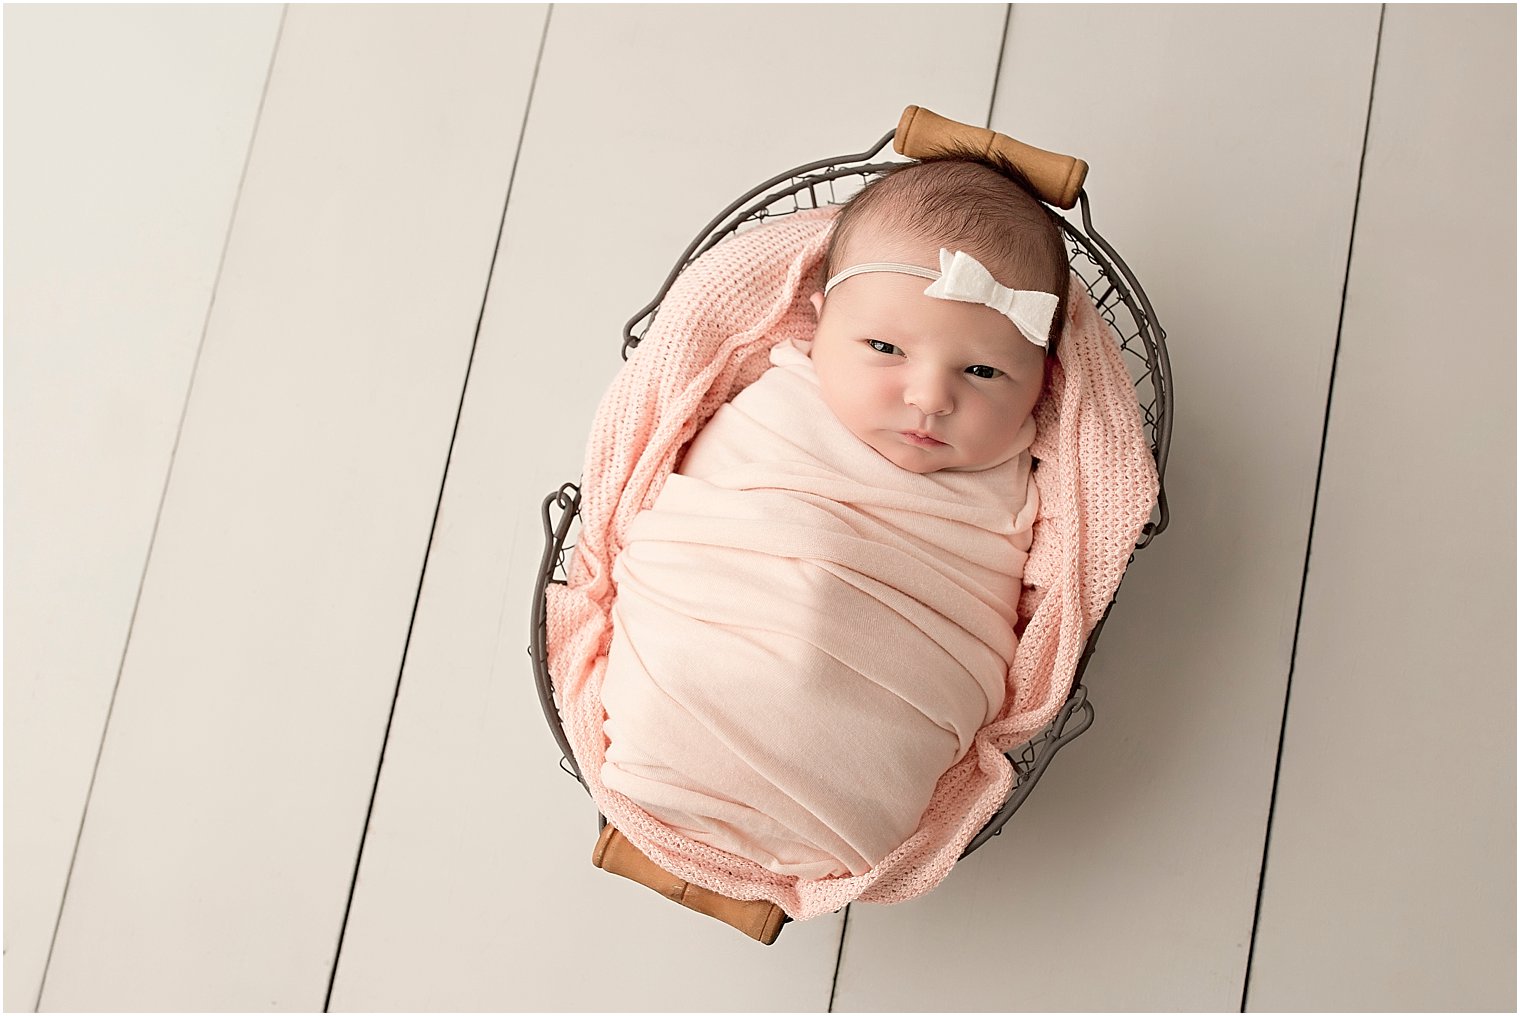 Newborn baby girl in a basket